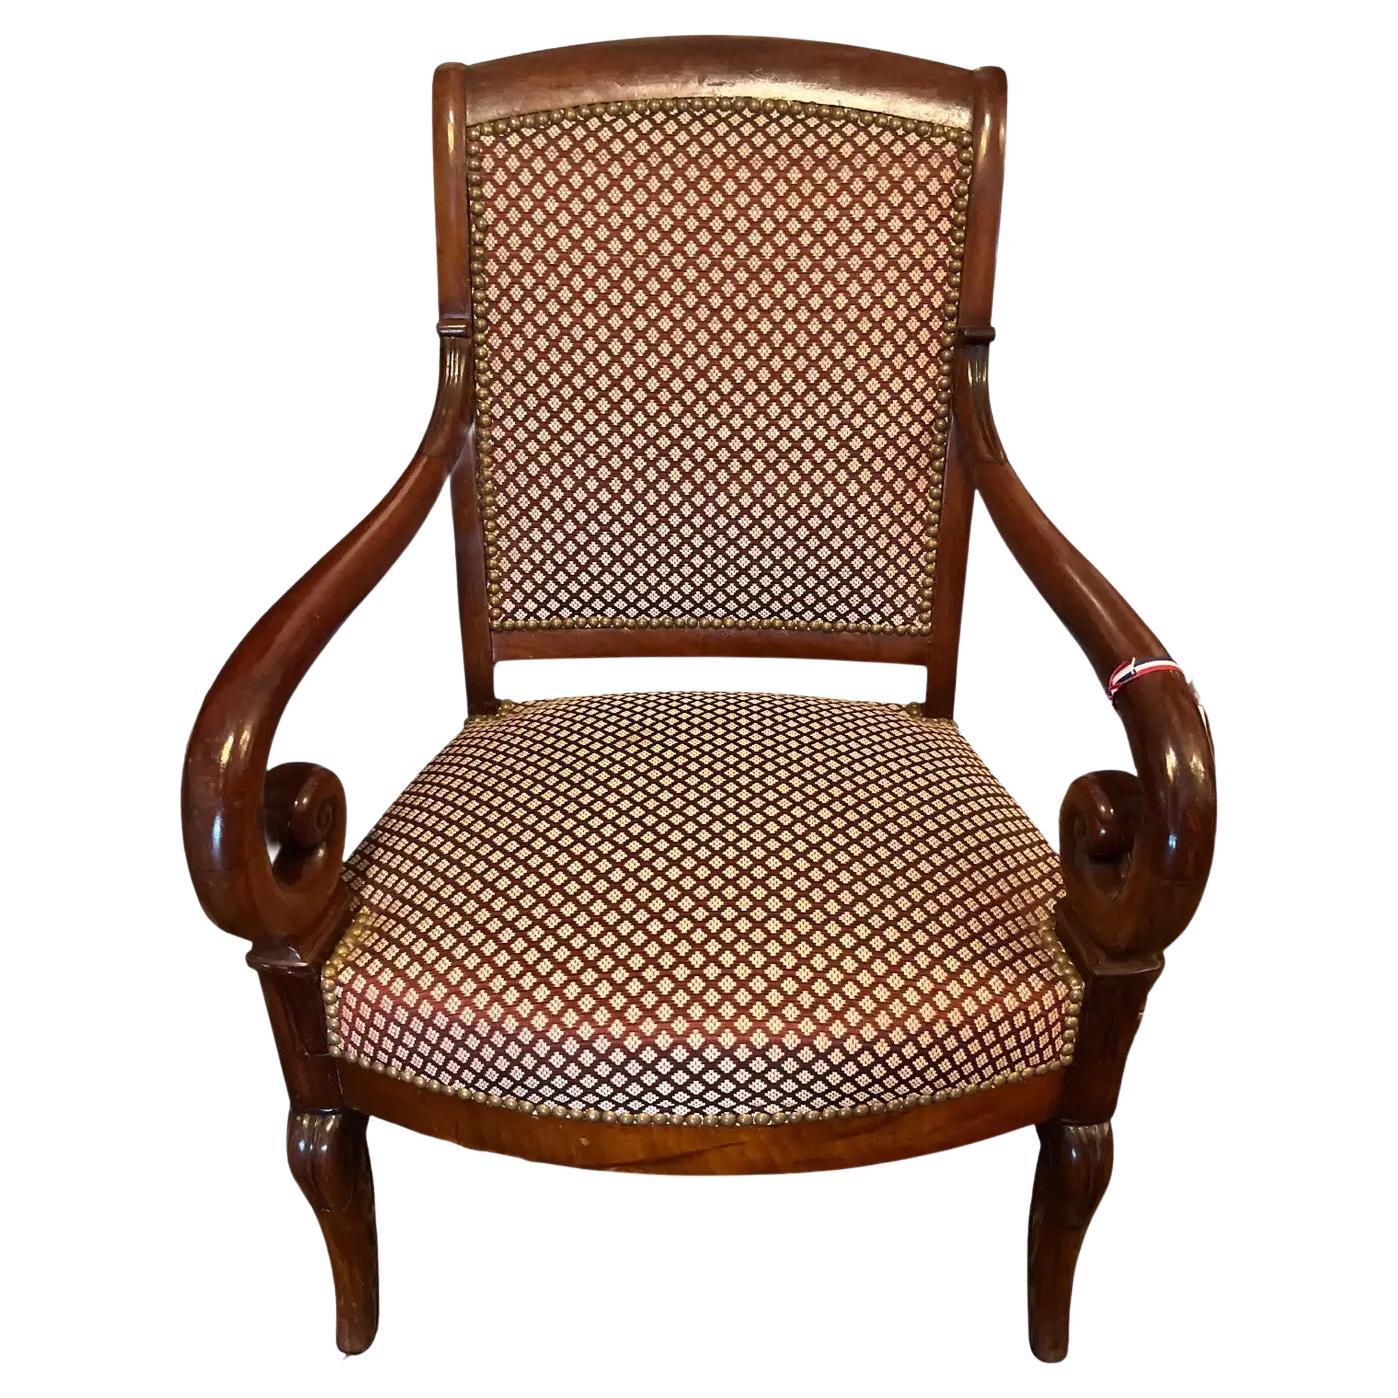 Englischer Mahagoni-Sessel des 19. Jahrhunderts, um 1870